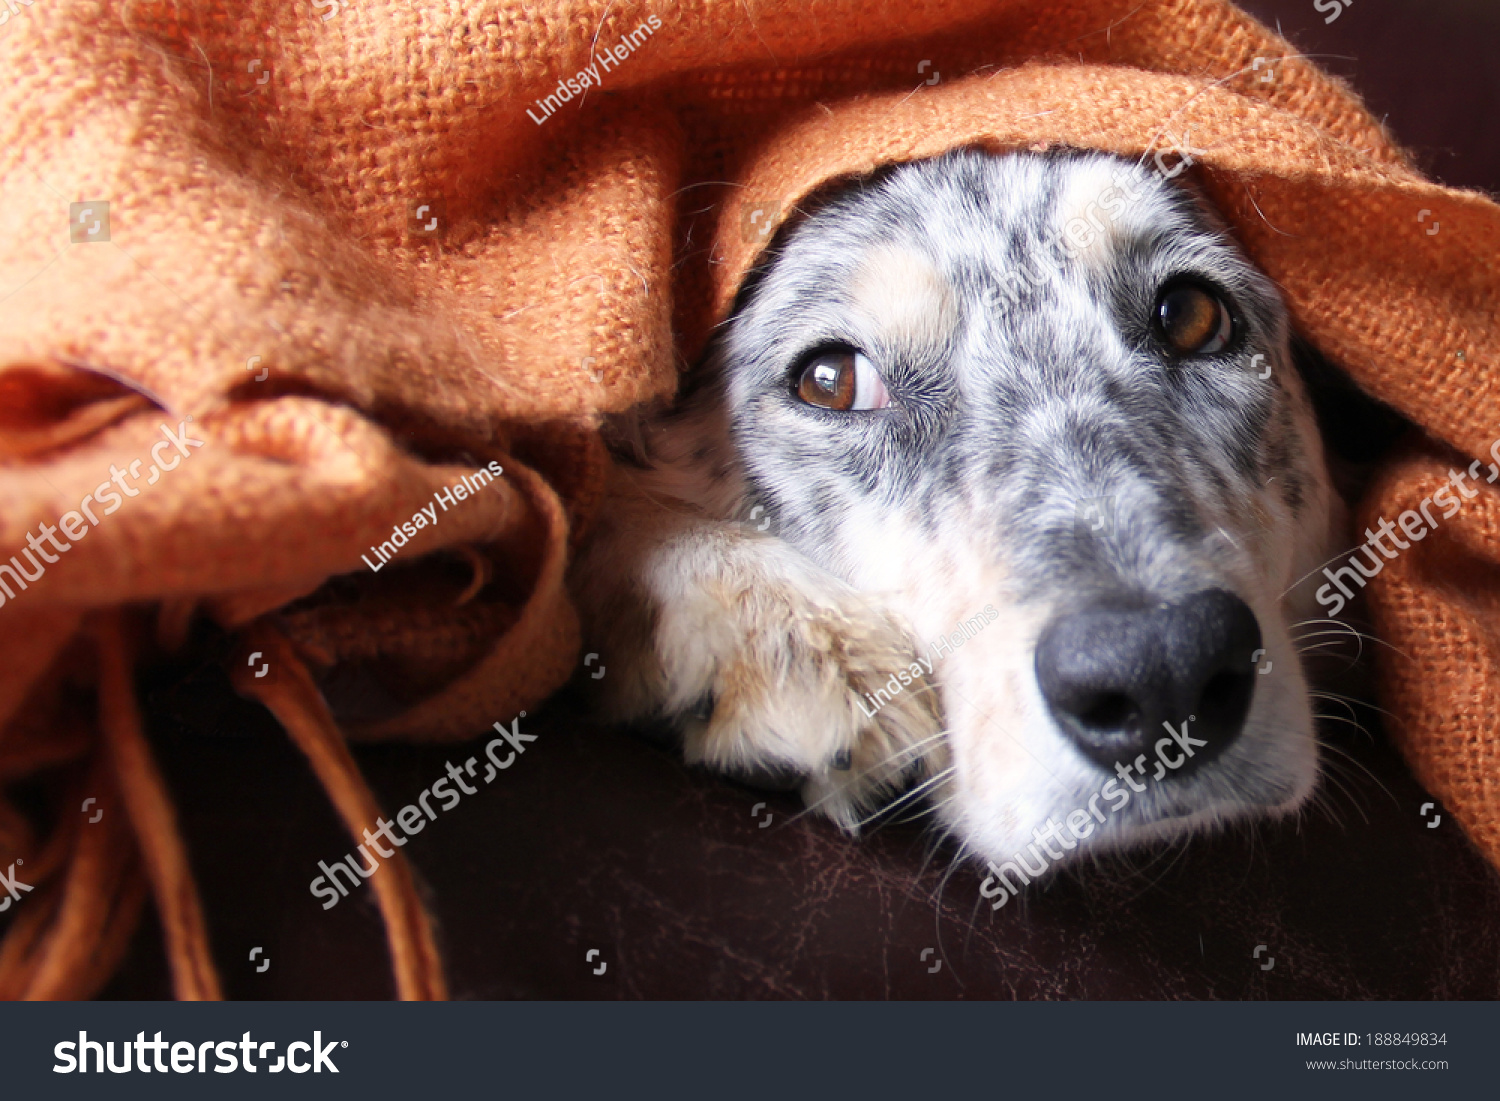 stock-photo-border-collie-australian-shepherd-dog-under-blanket-on-couch-looking-sad-hopeful-lonely-bored-188849834.jpg